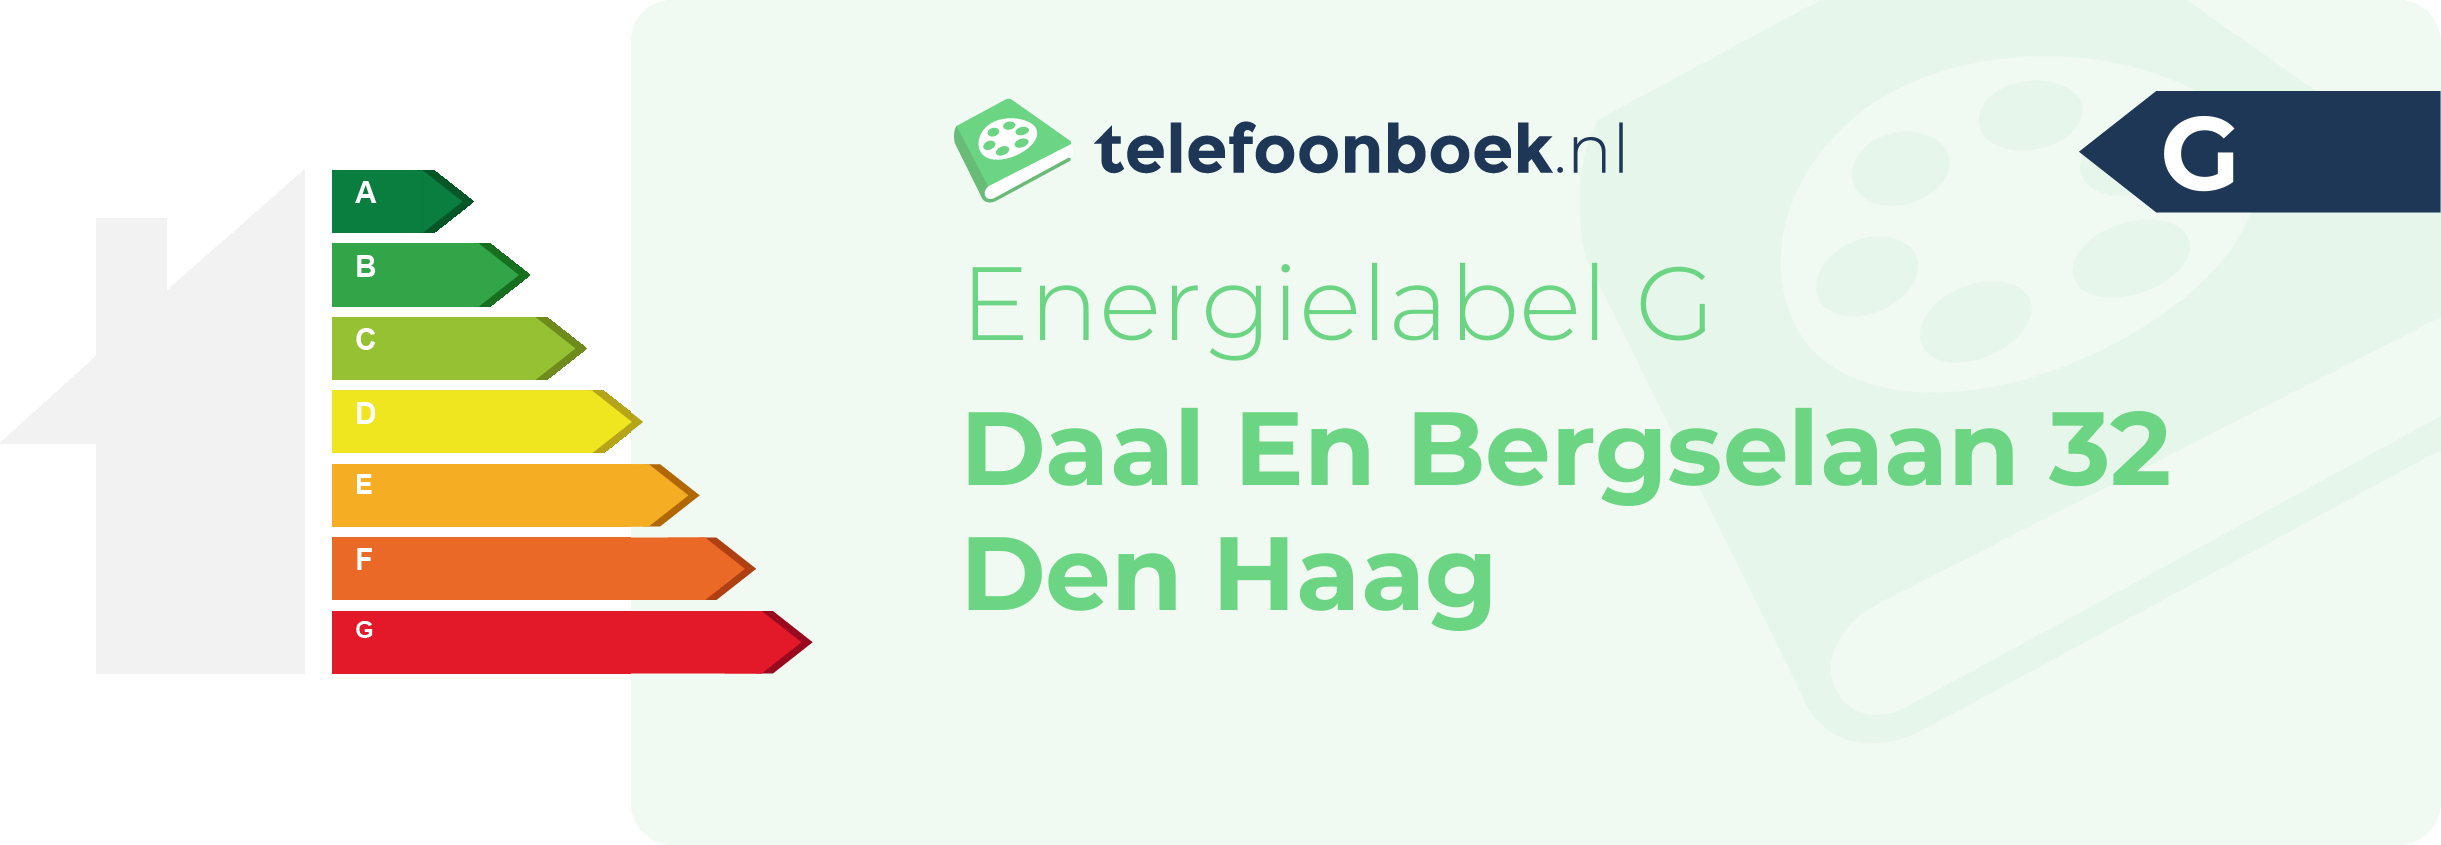 Energielabel Daal En Bergselaan 32 Den Haag